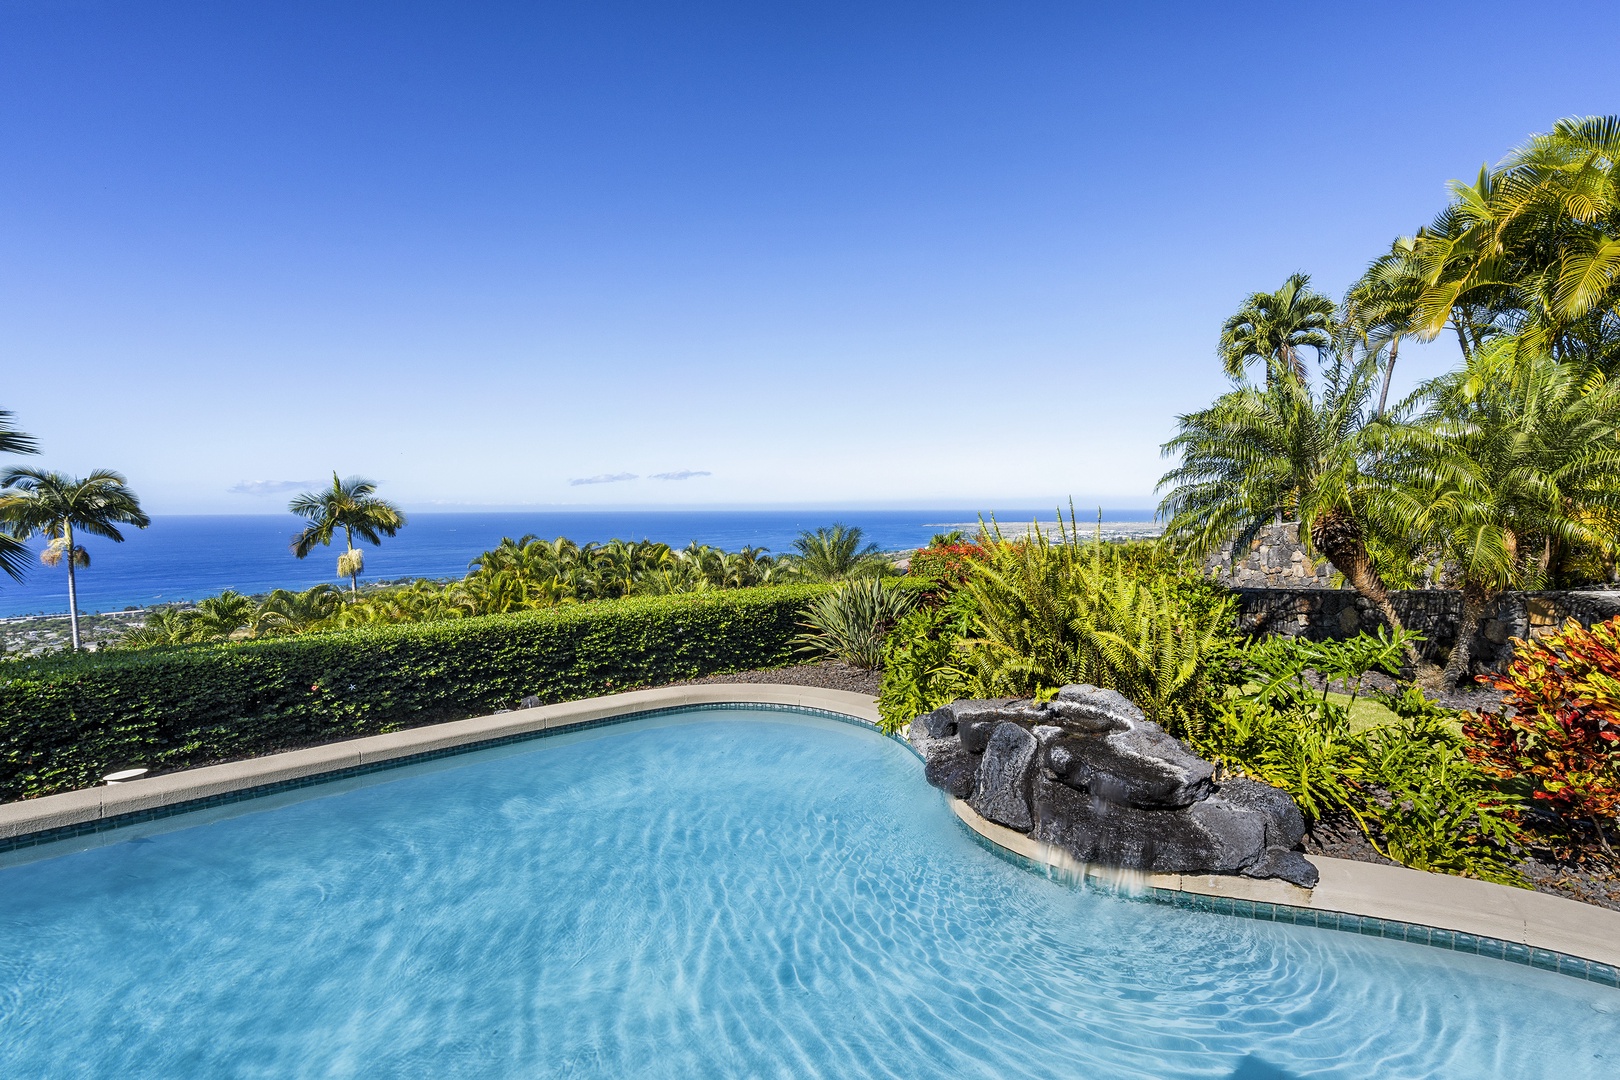 Kailua Kona Vacation Rentals, Hale Aikane - Enjoy the tranquil waterfall pool feature!